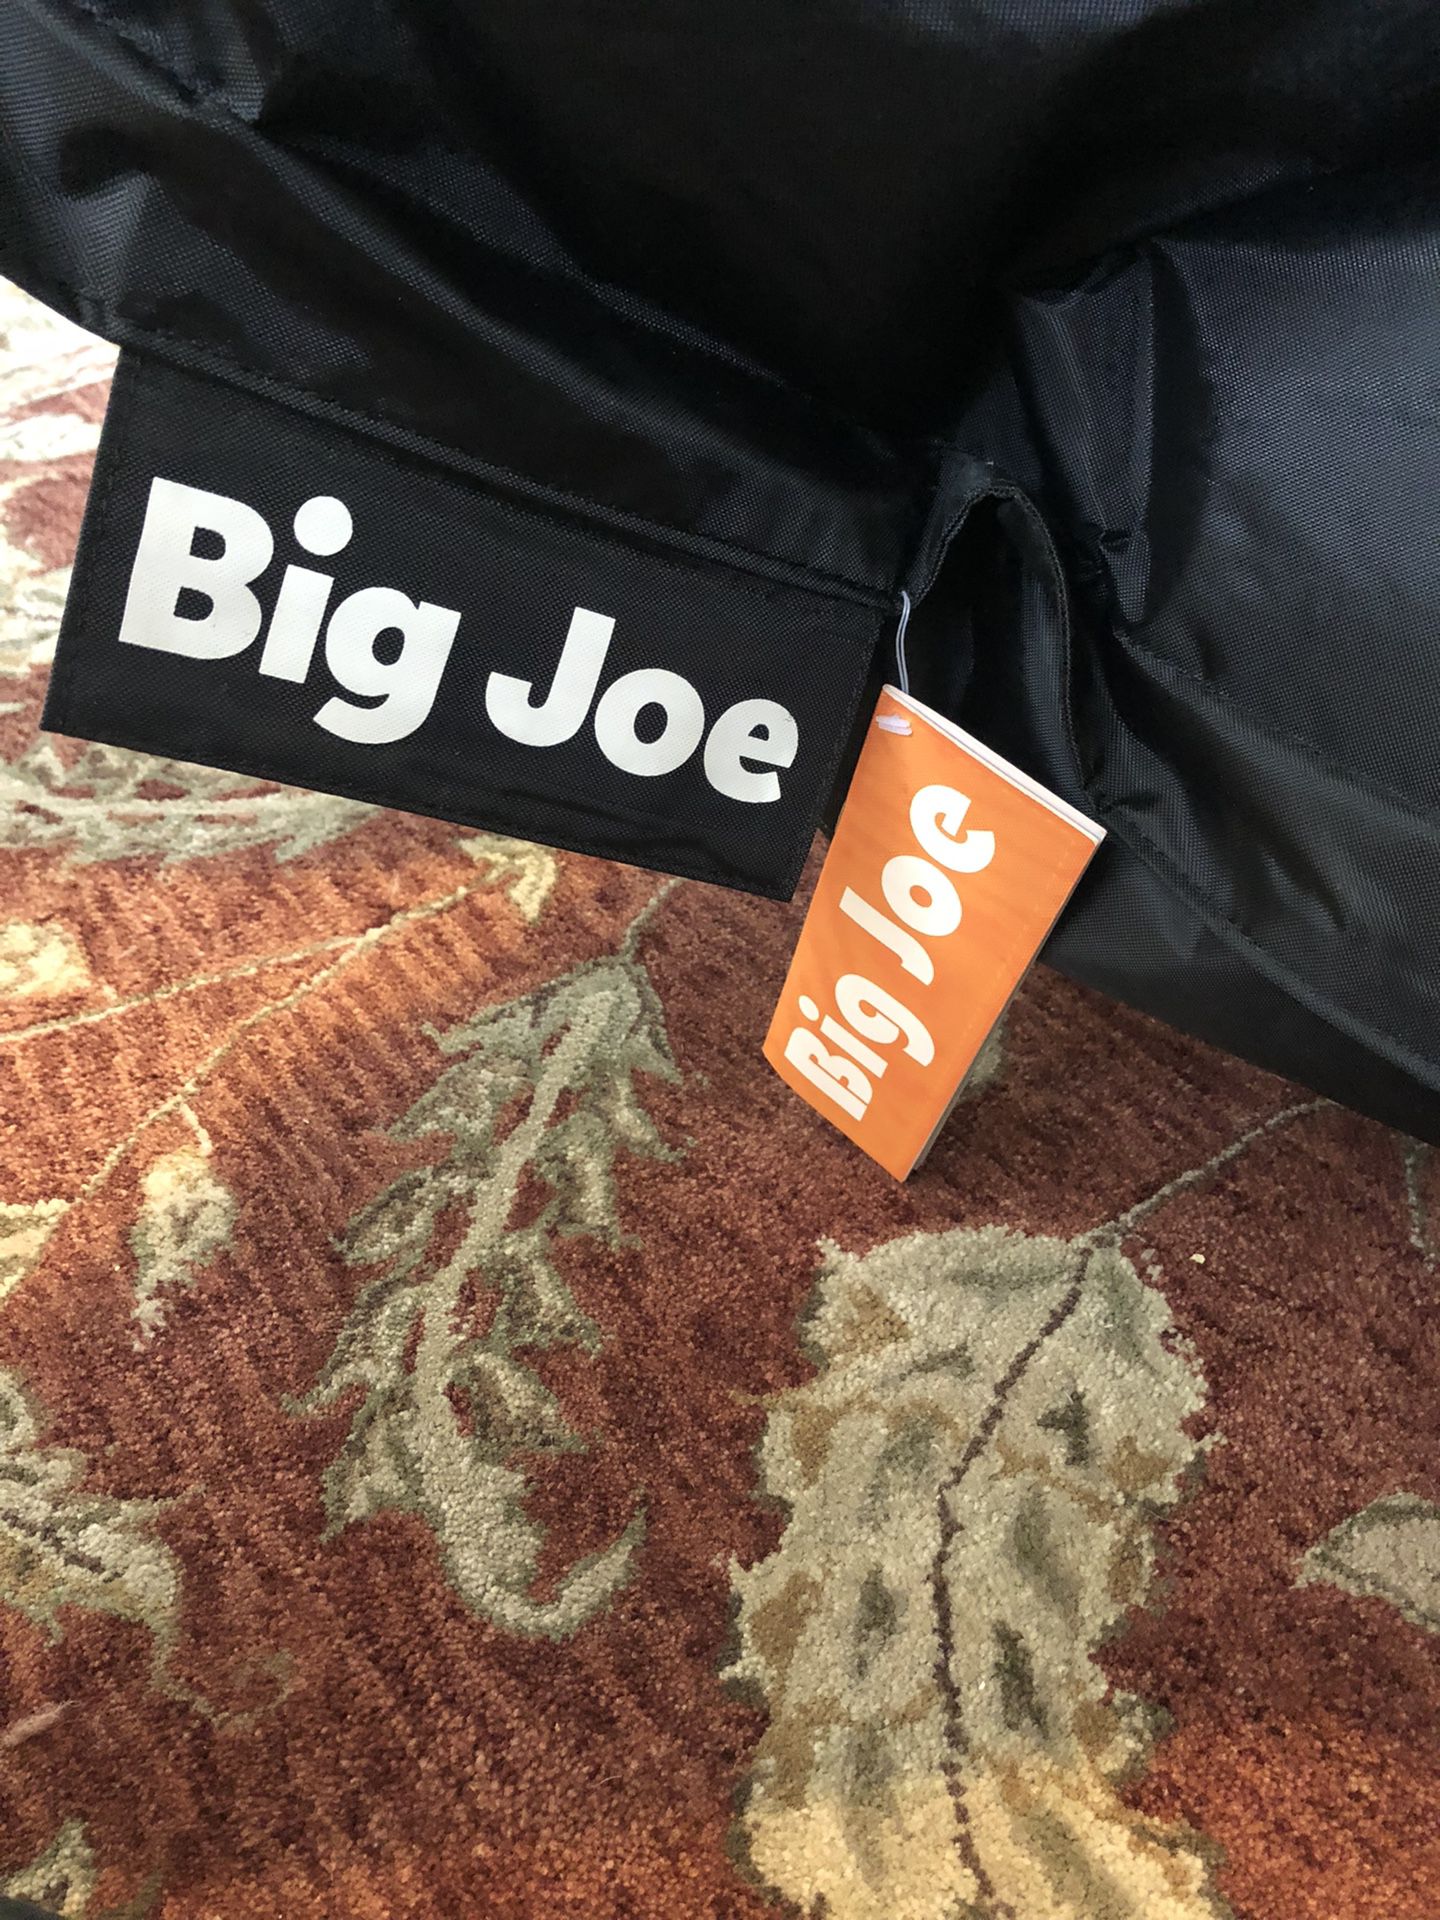 The Original Joe Bean Bag Chair